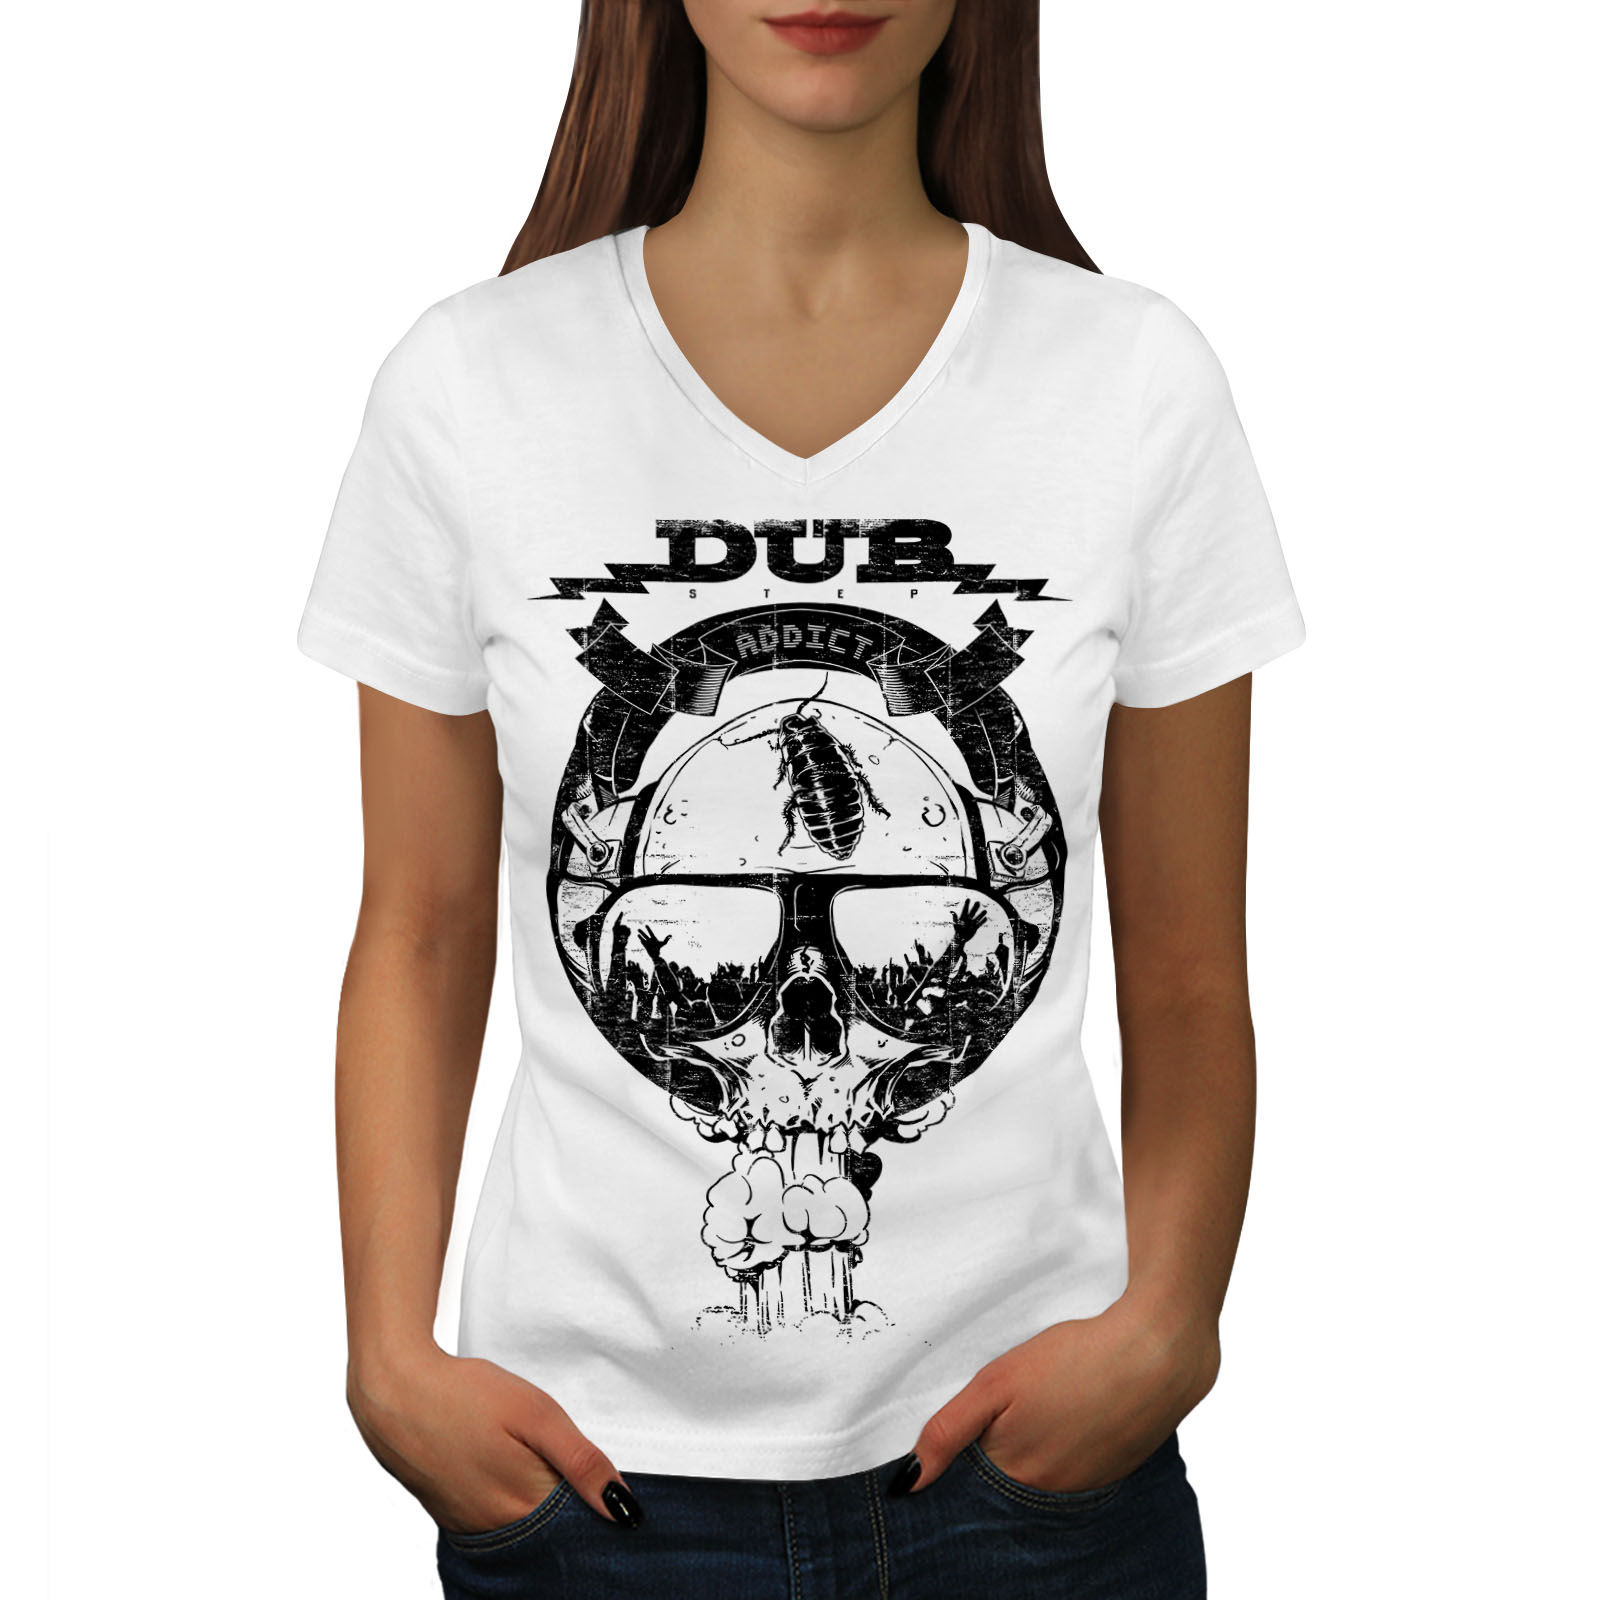 Electronic Graphic Design Printed Tee Wellcoda Dub Addicted Dead Mens T-shirt 